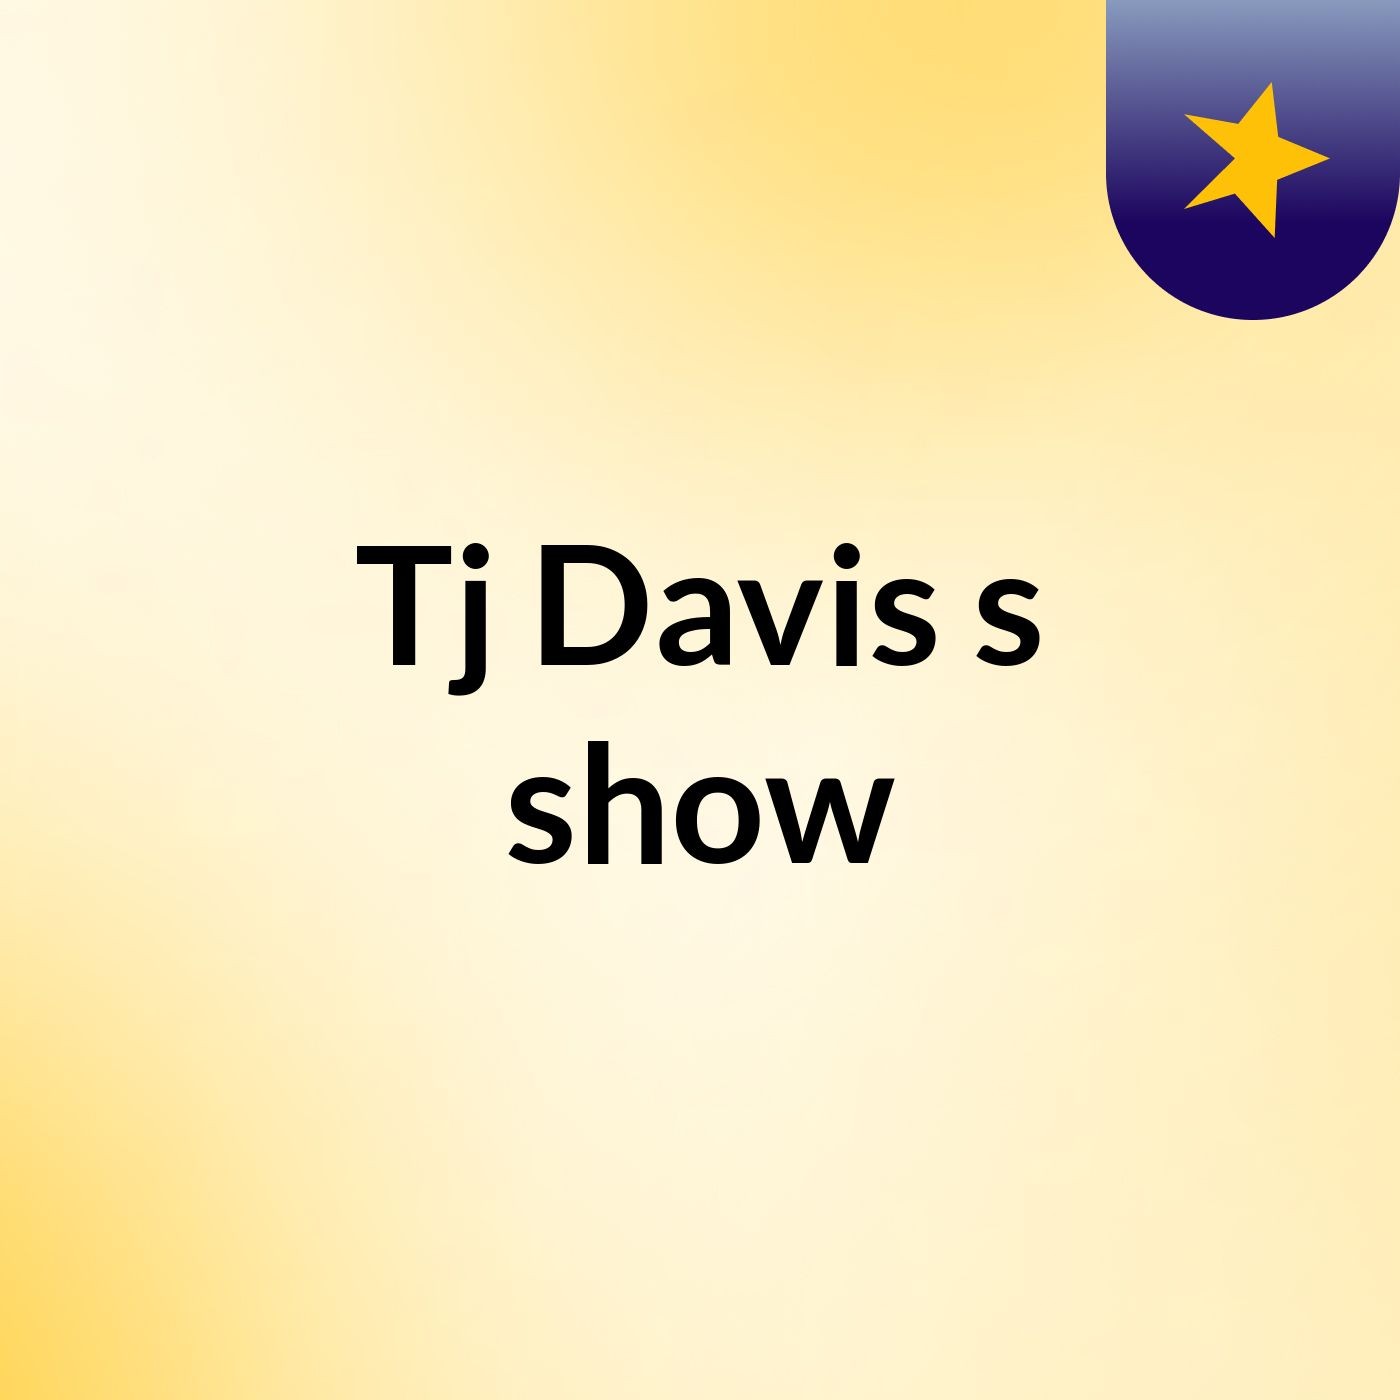 Tj Davis's show